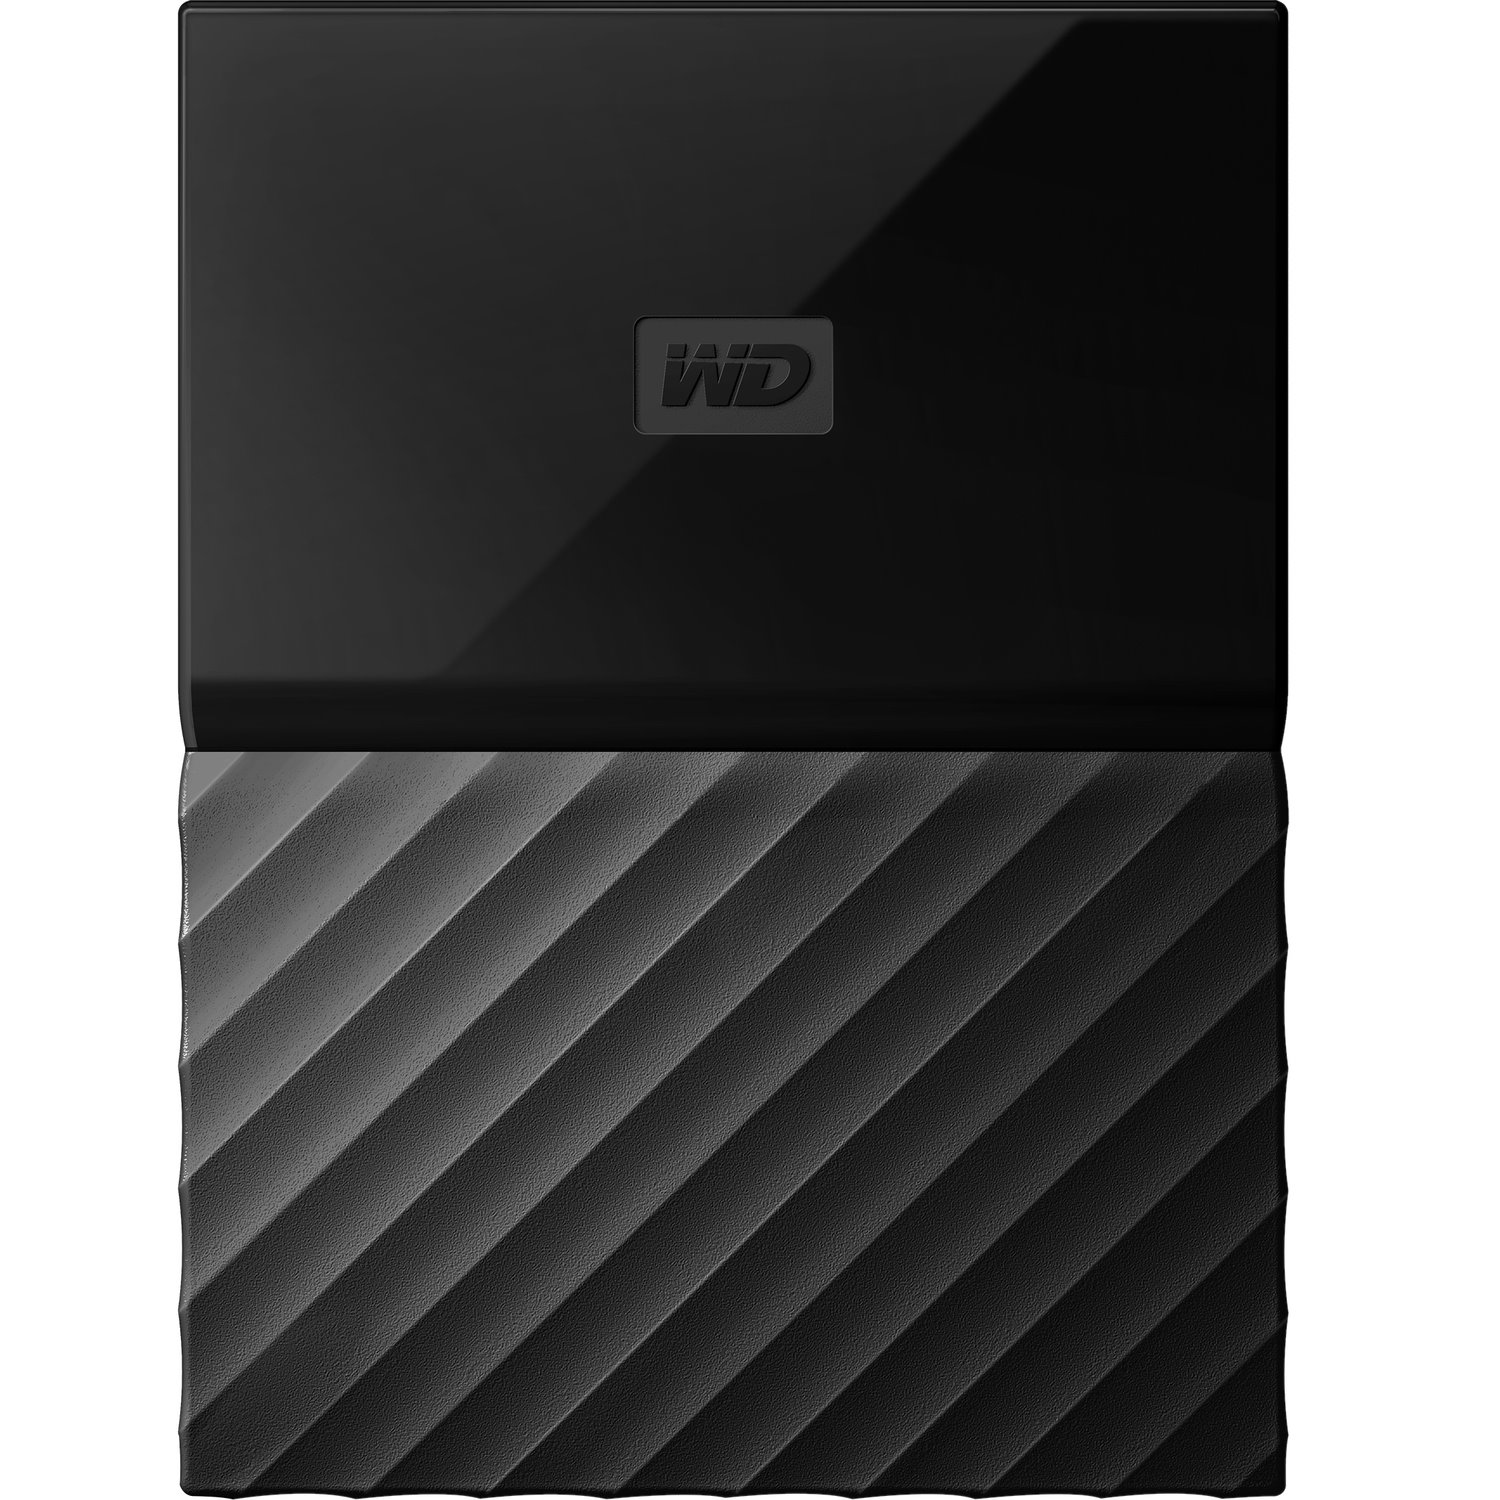 WD My Passport for Mac Portable WDBFKF0010BBK-WESE 1 TB Portable Hard Drive - External - Black